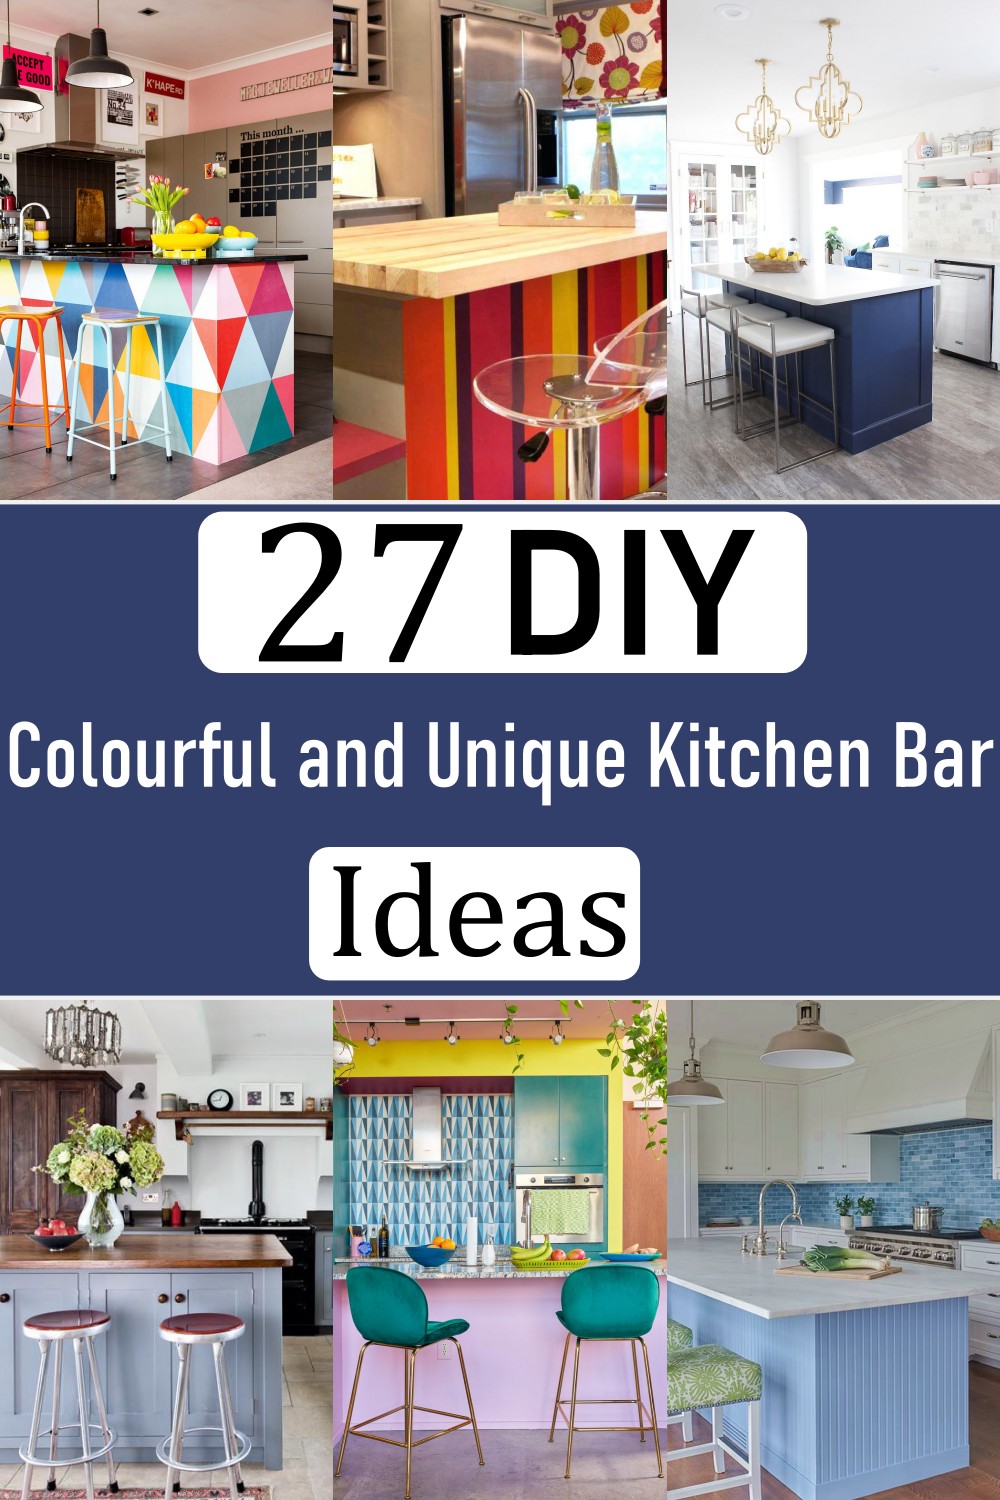 Colourful and Unique Kitchen Bar